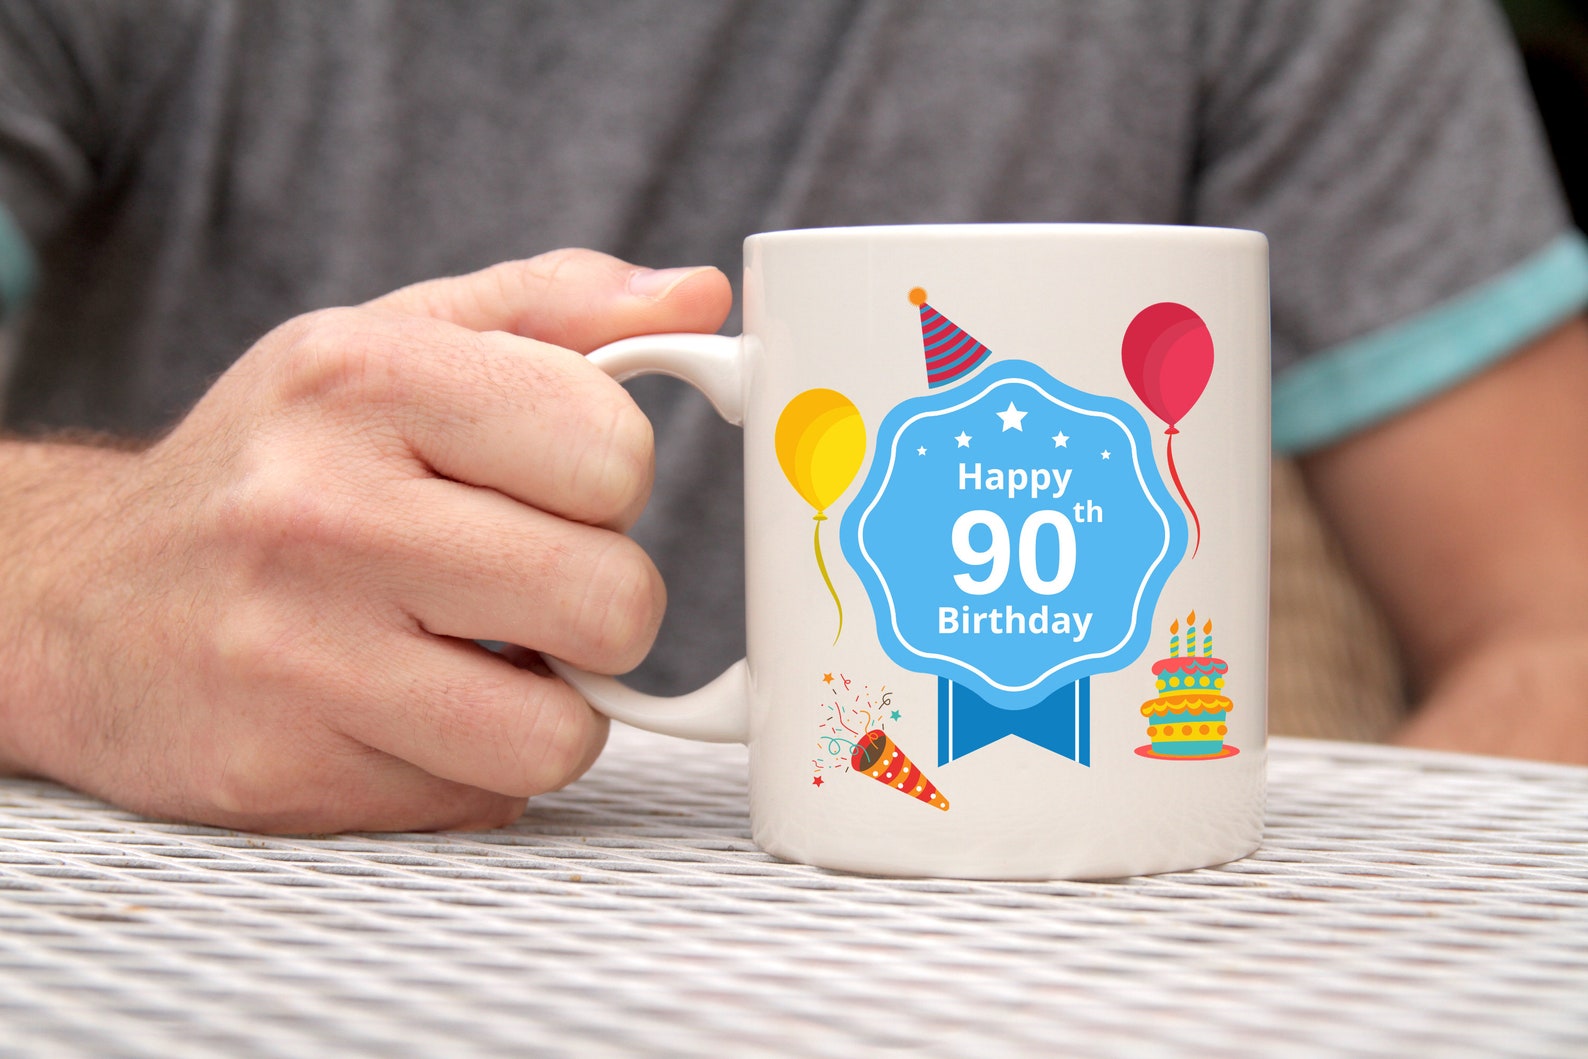 90th Birthday Mug 90th birthday gift for Him Men Vintage